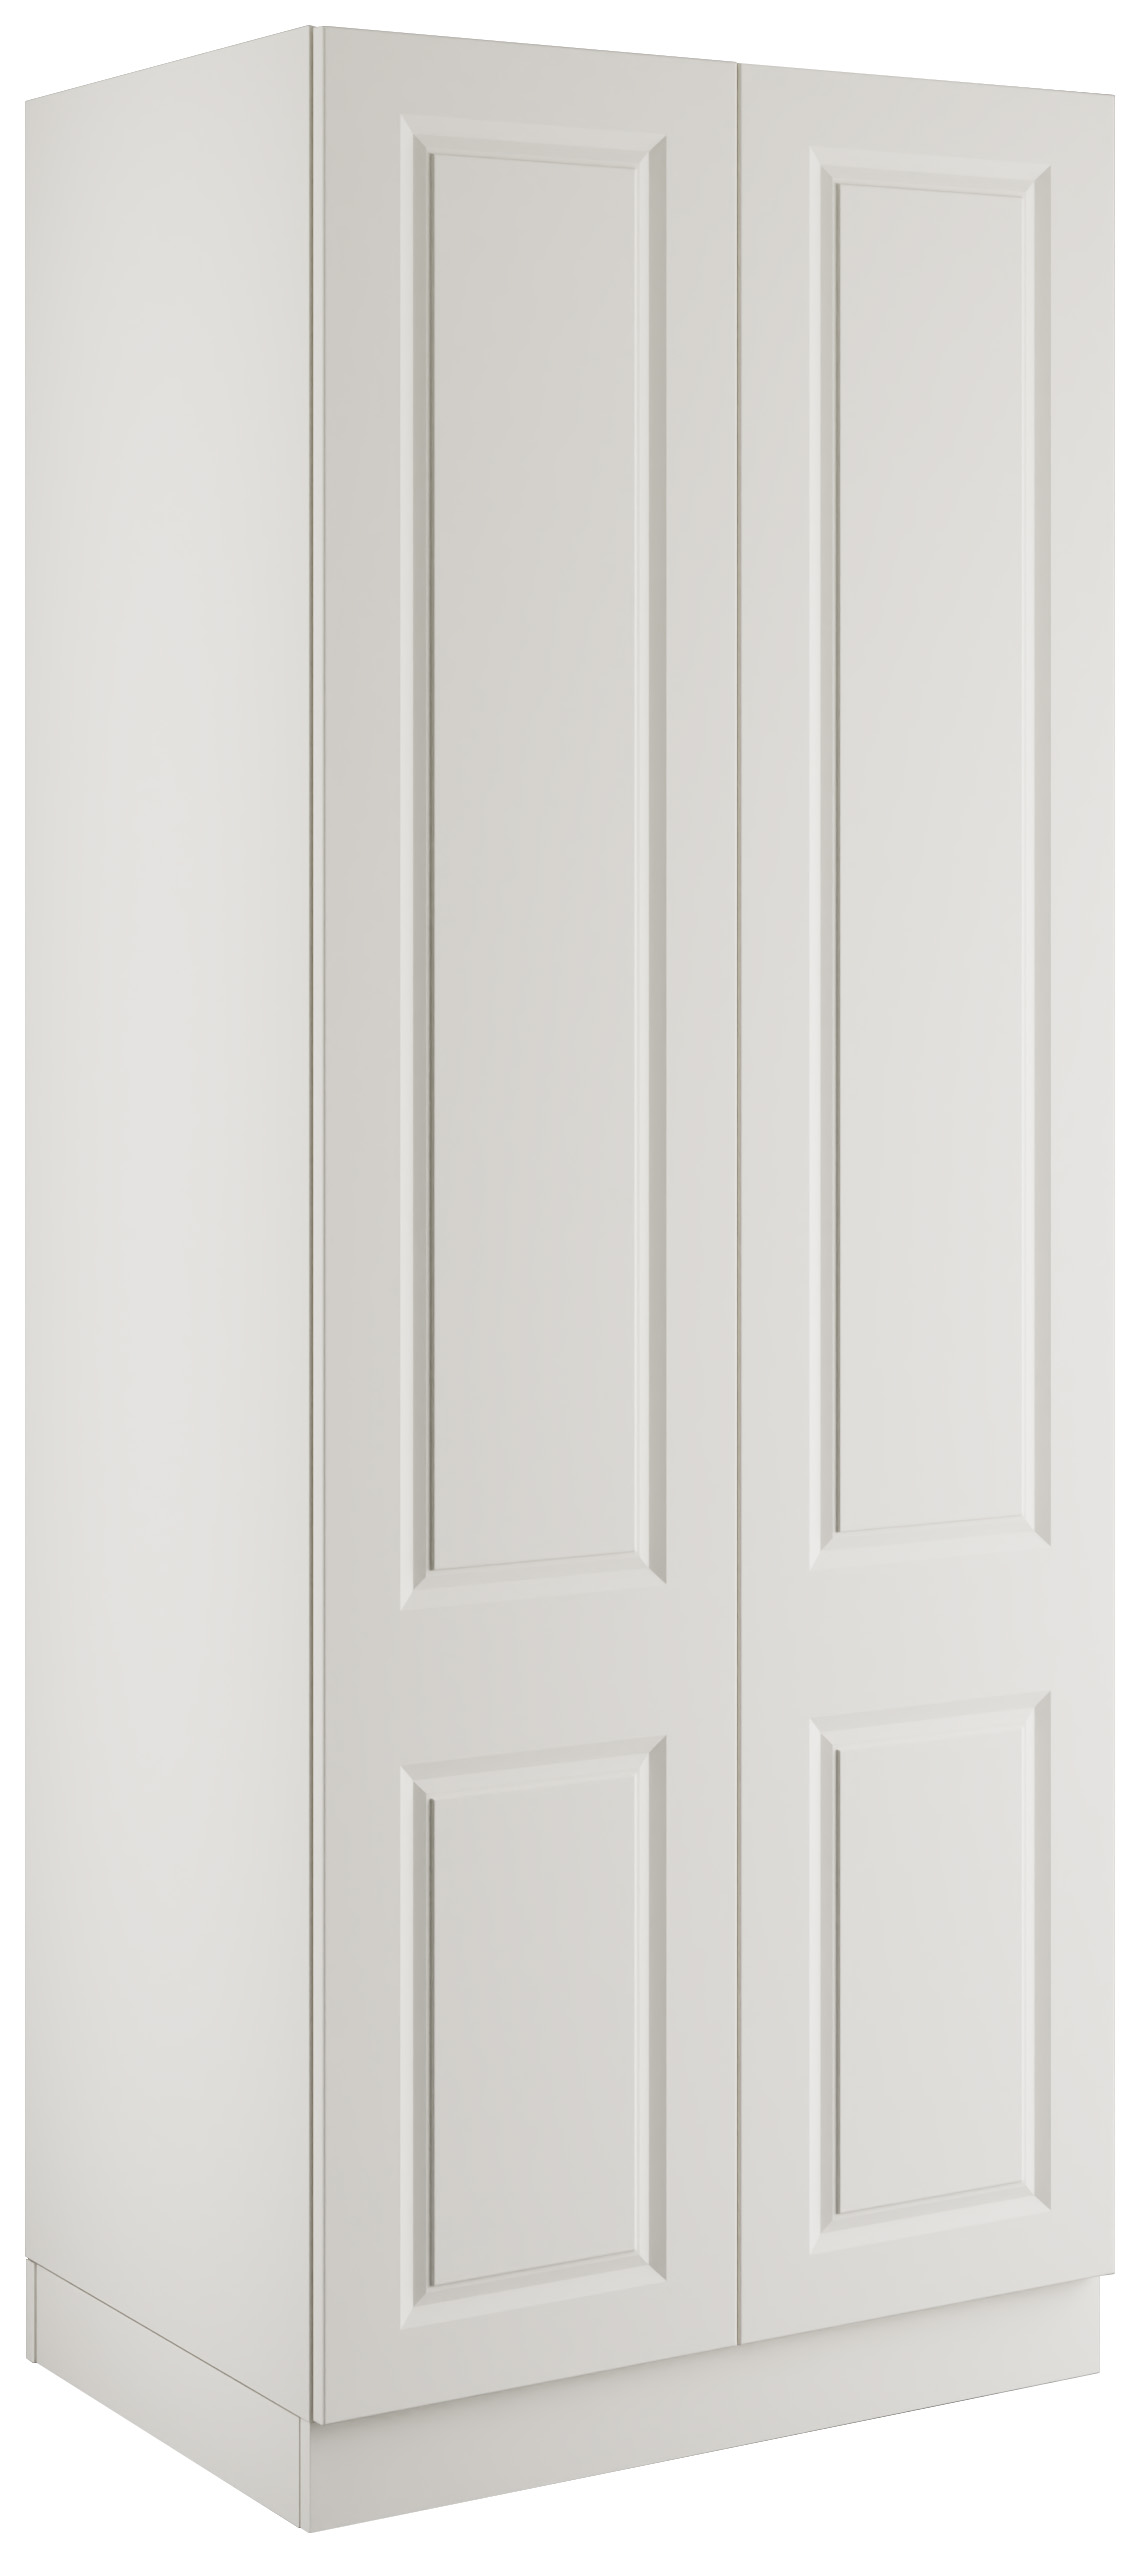 Harrogate White Double Wardrobe with Double Rail - 900 x 2260 x 608mm